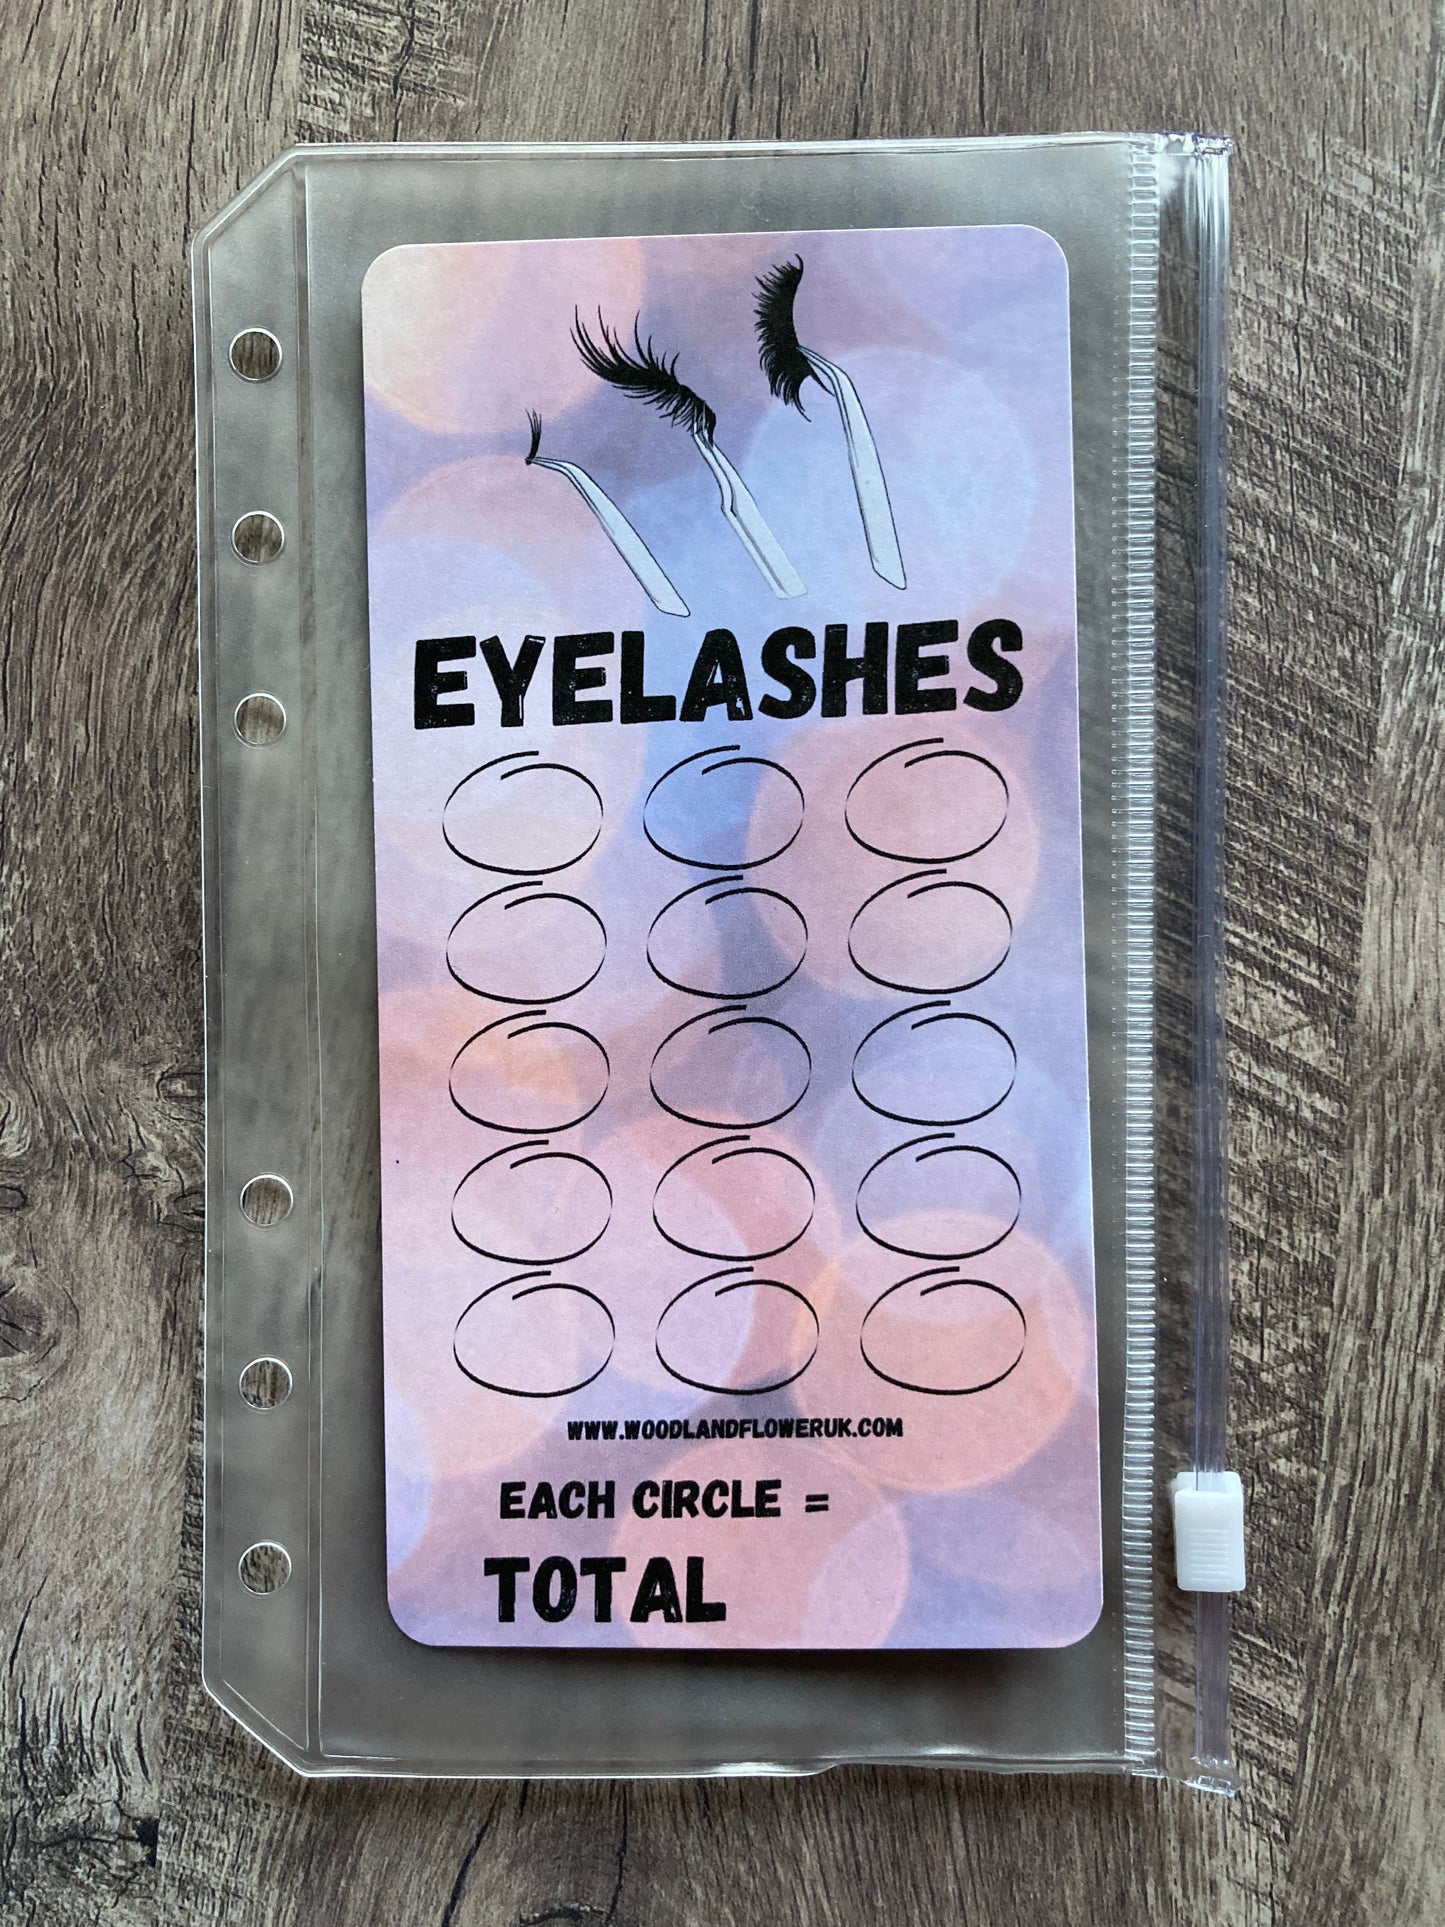 Saving challenge “eyelashes”